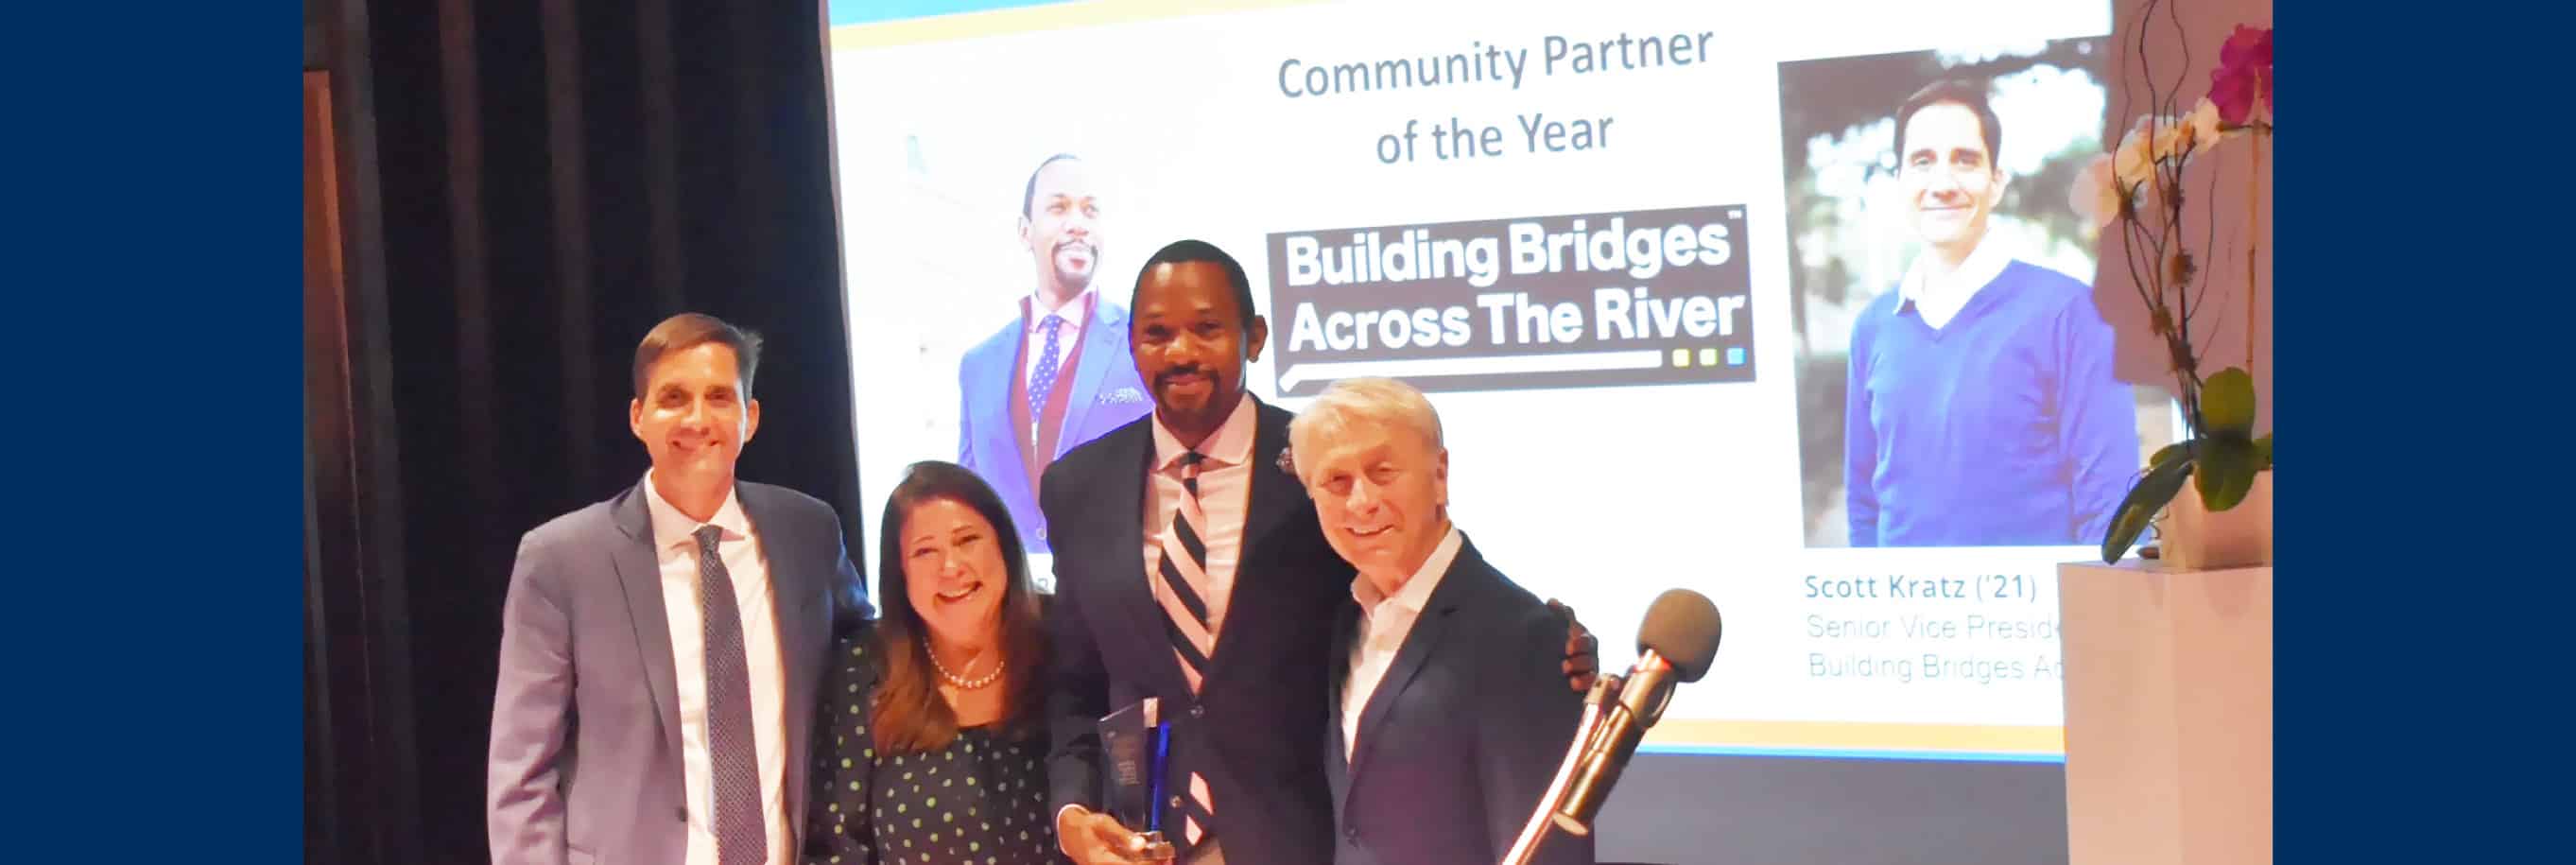 Building Bridges Honored for Community Partnership